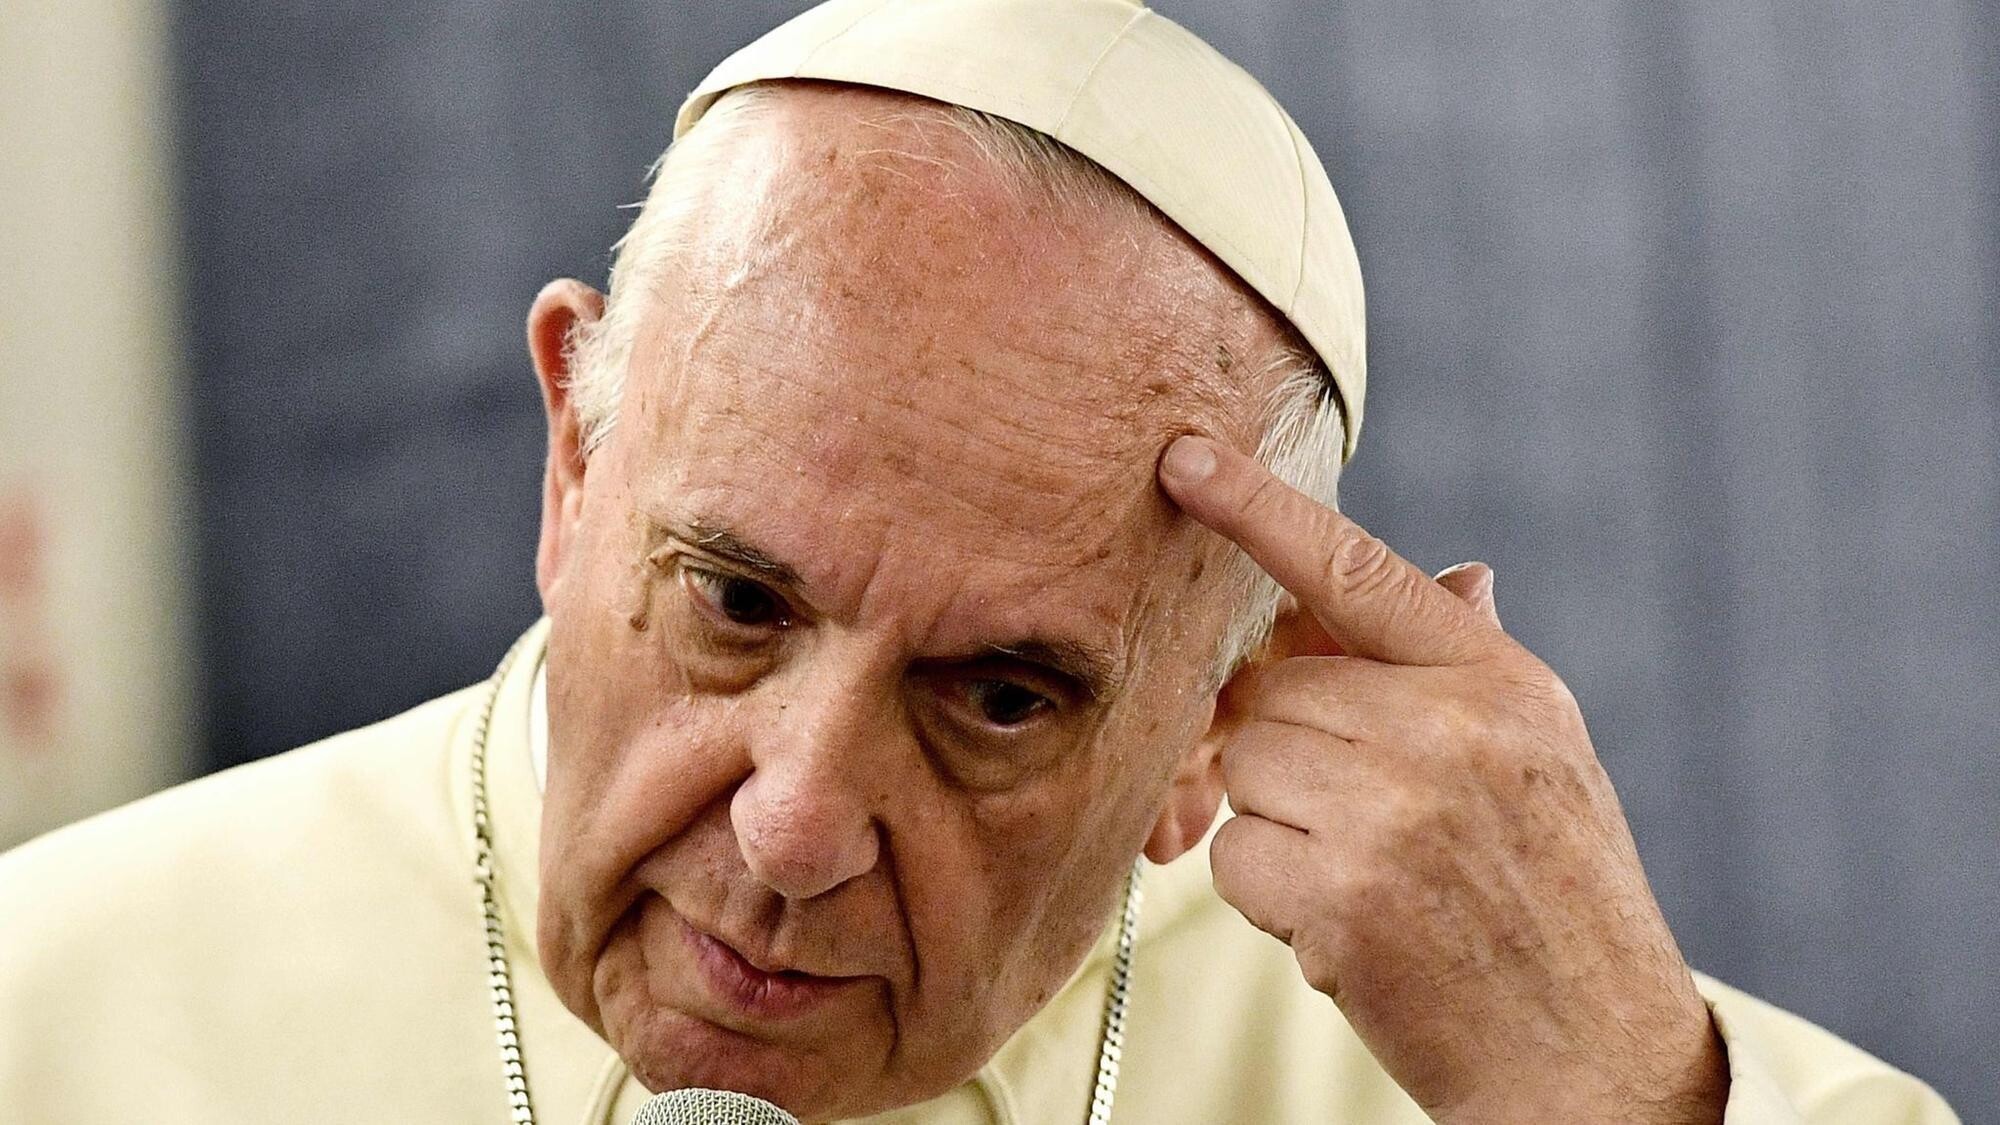 Папа римский говорит. Франциск (папа Римский). Папа Римский Франциск 2022. Понтифик папа Римский Франциск. Франциск 1 папа Римский.